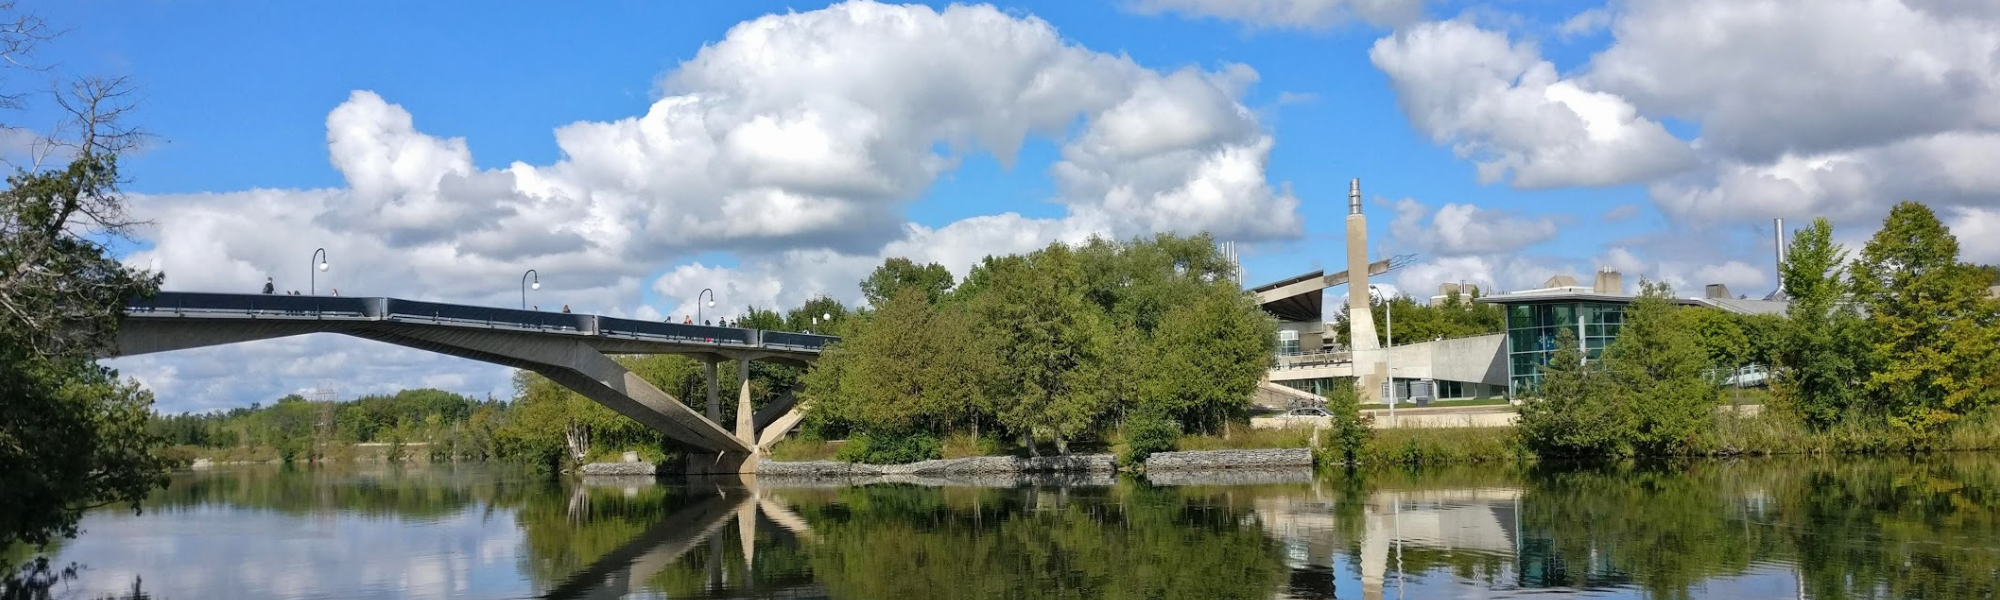 Reflection of Bridge 